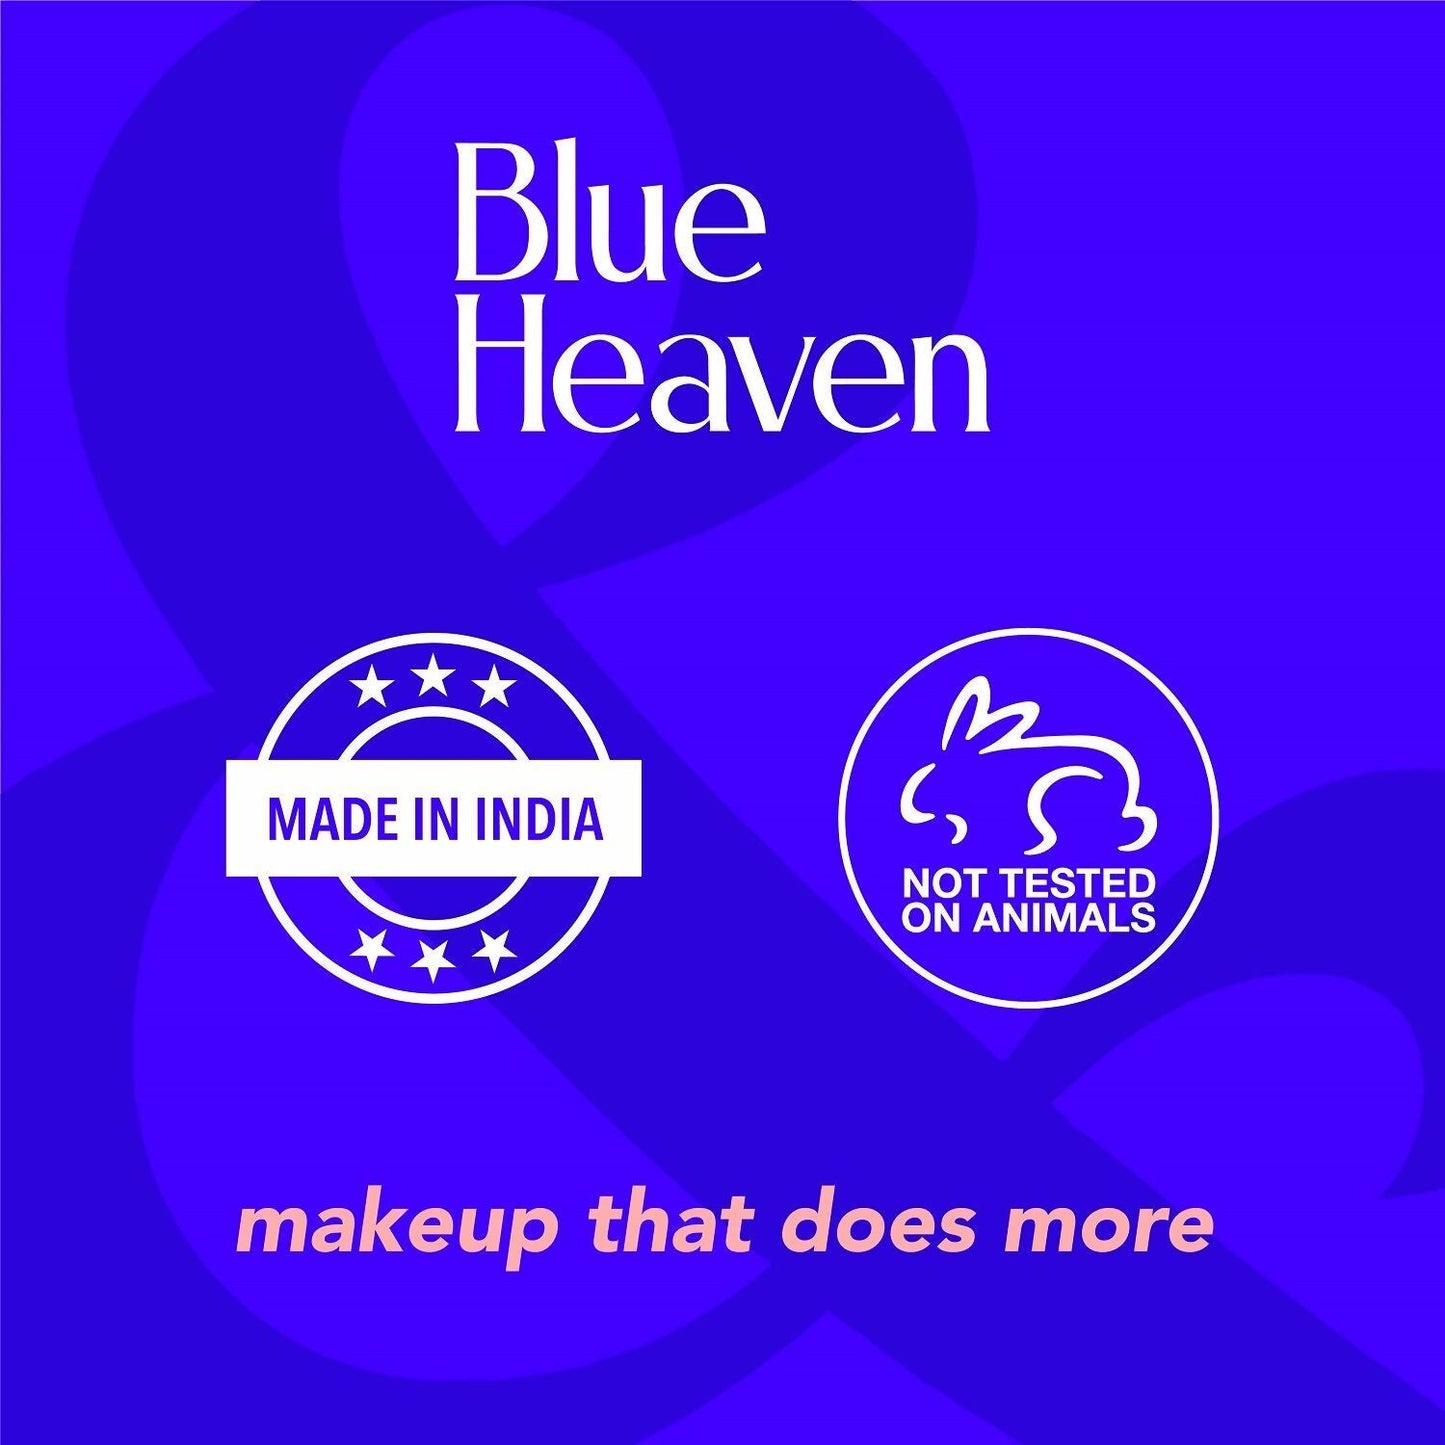 Blue Heaven Pop & Glow Cheek & Eye Gel Bloom Highlighter - Golden Hour